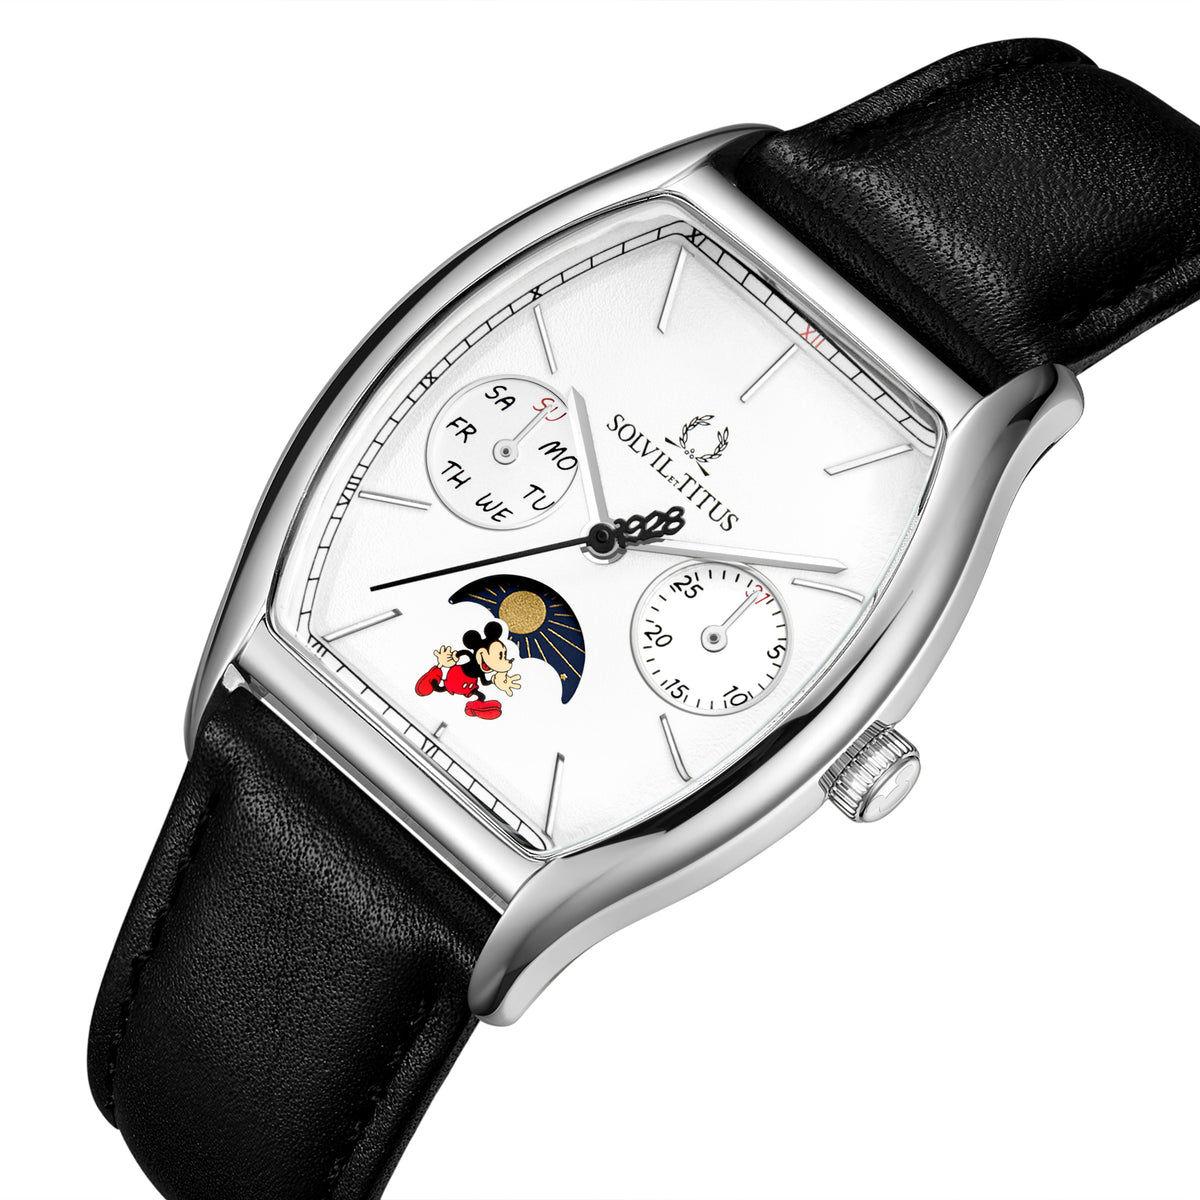 [Pre-Order] คอลเลกชัน Barista “Mickey Mouse 95th Anniversary” นาฬิกาผู้หญิง ลิมิเตดอิดิชัน เรือนสีเงิน มัลติฟังก์ชัน บอกกลางวัน-กลางคืน ระบบควอตซ์ สายหนัง ขนาดตัวเรือน 31 มม. (W06-03356-001)